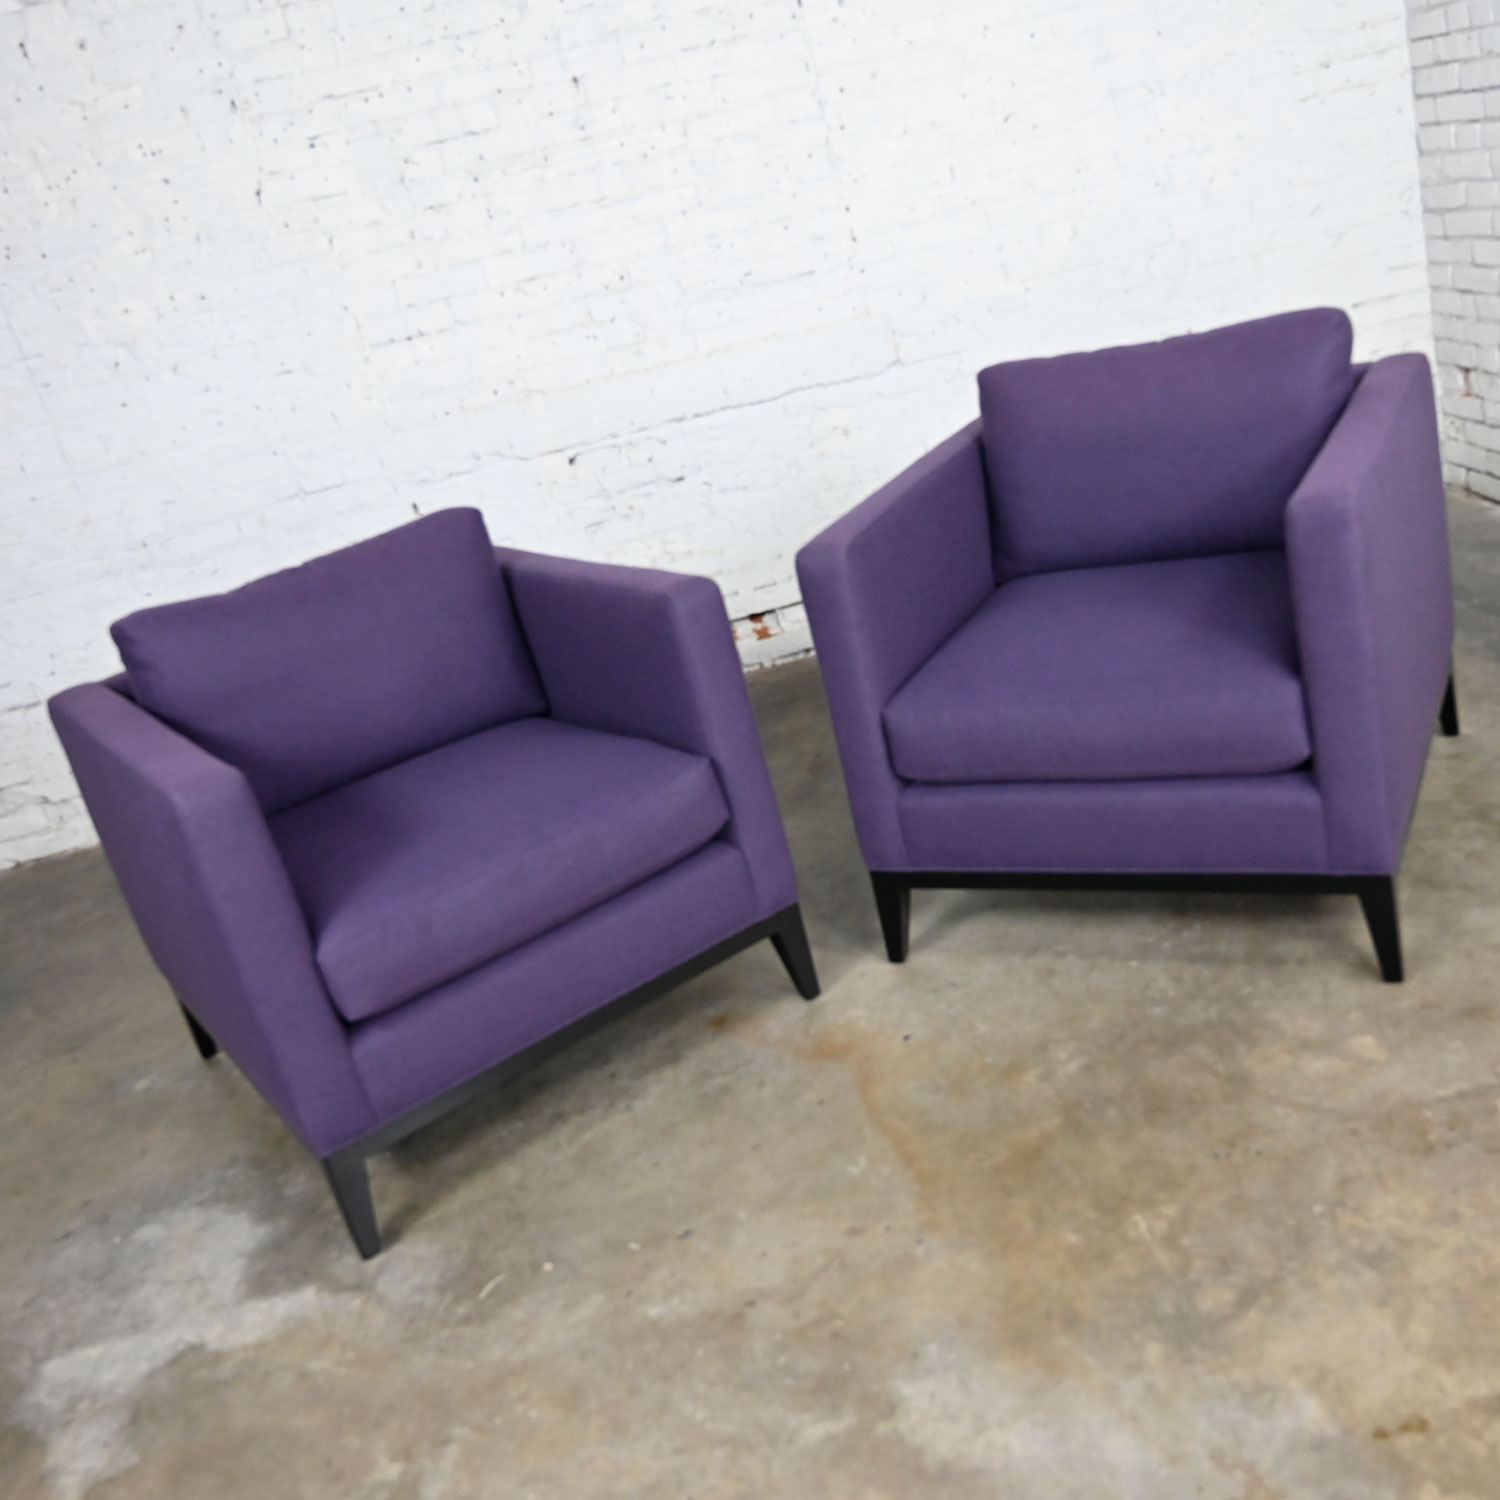 Modern Purple Plum Tone Tuxedo Style Club Chairs by Baker a Pair